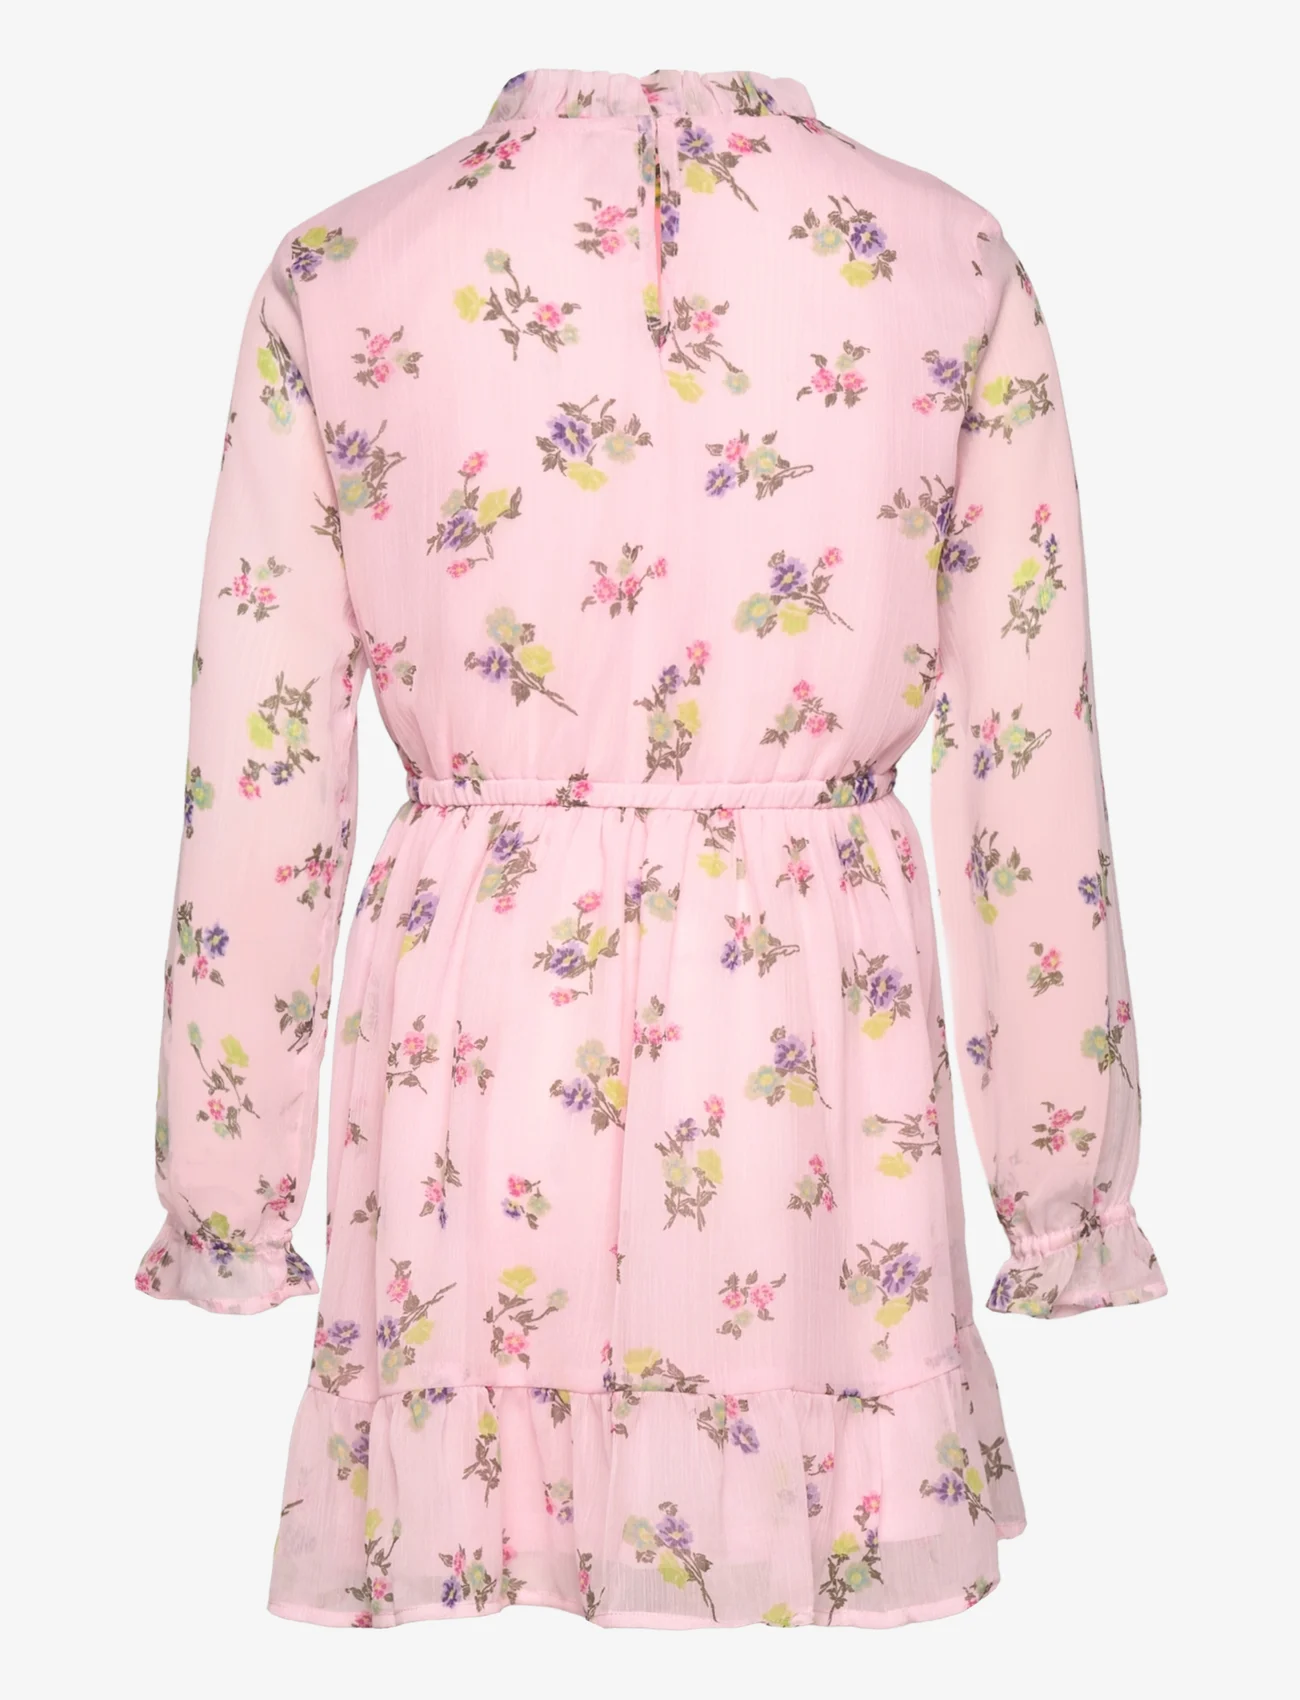 Kids Only - KOGMALINA L/S DRESS PTM - long-sleeved casual dresses - cherry blossom - 1